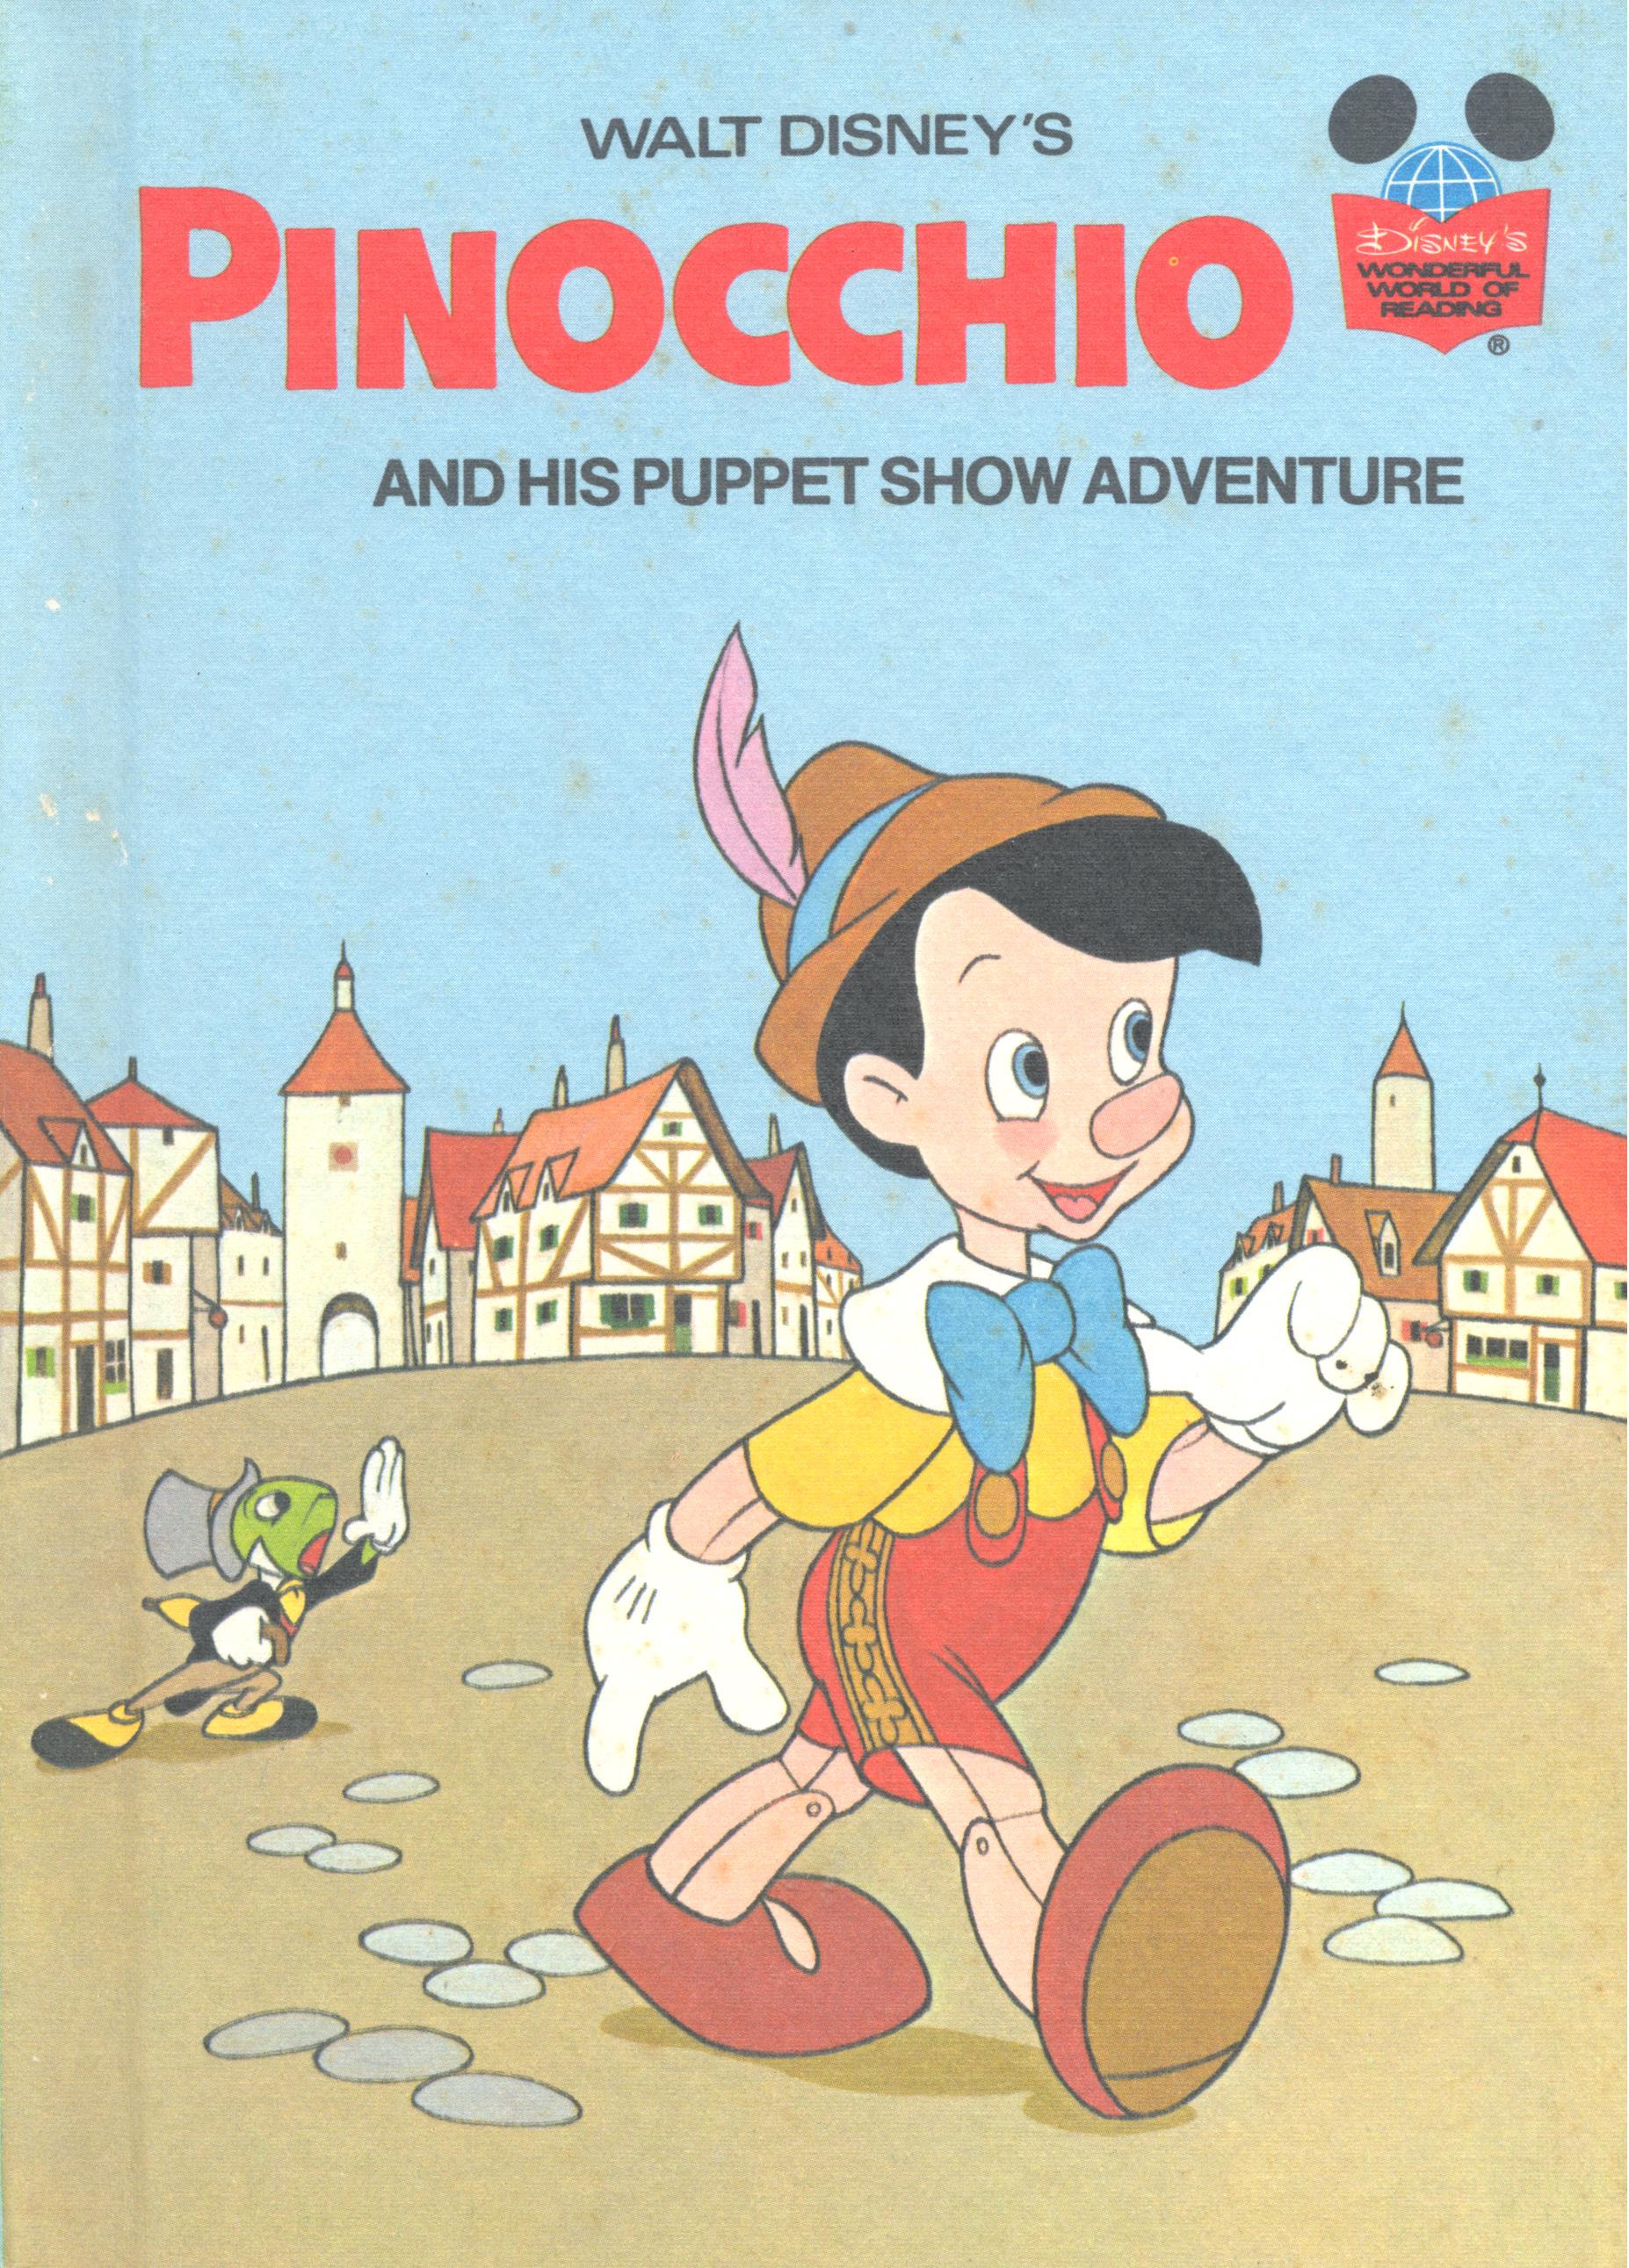 Walt Disney' s Pinocchio and his puppet show adventure.